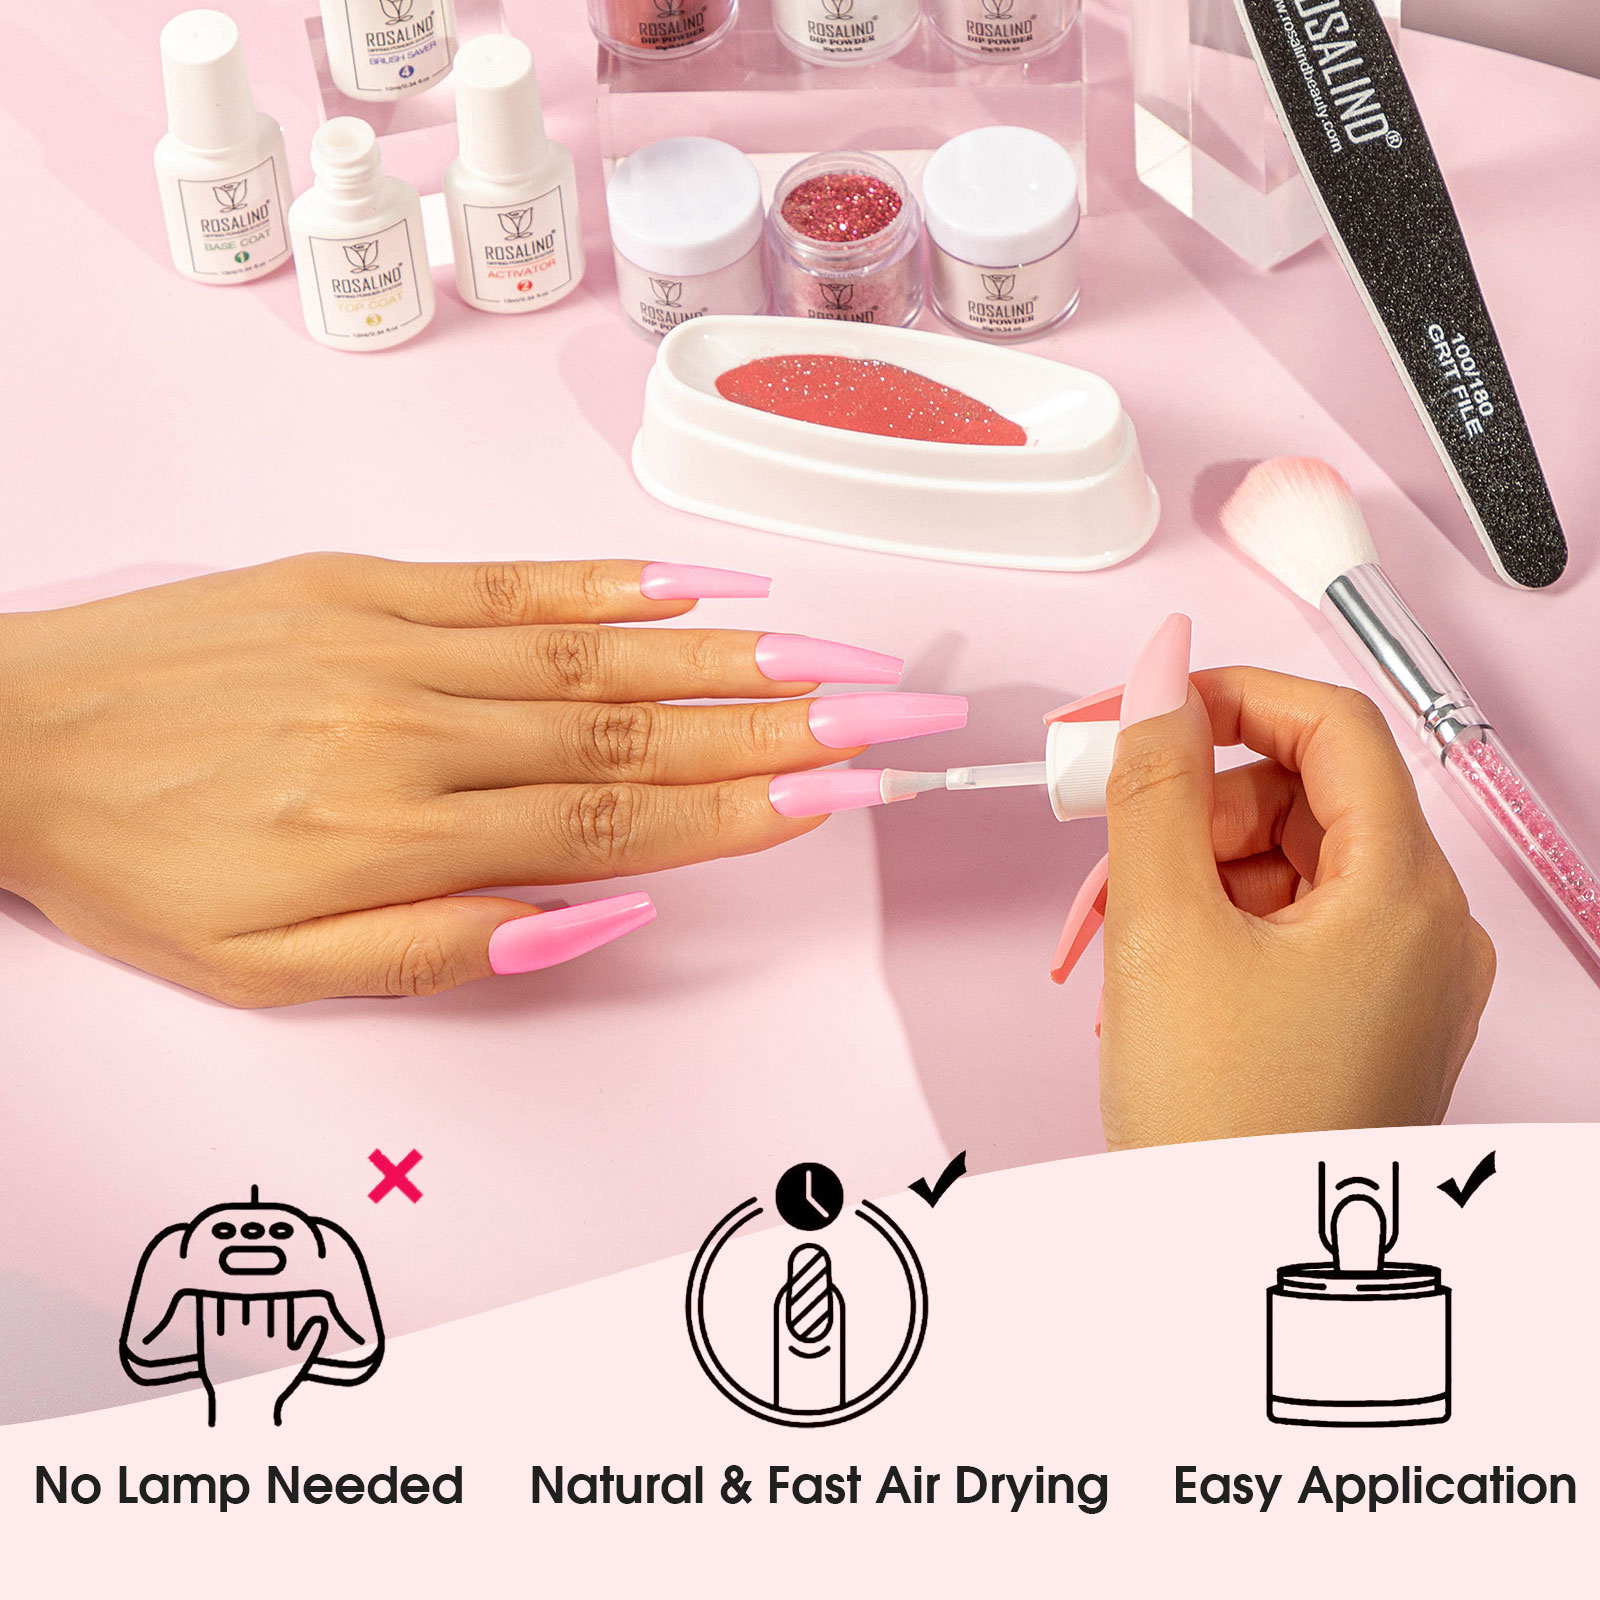 ROSALIND cross-border manicure powder soaking powder combination set glue manicure nail polish color glue manicure supplies tools